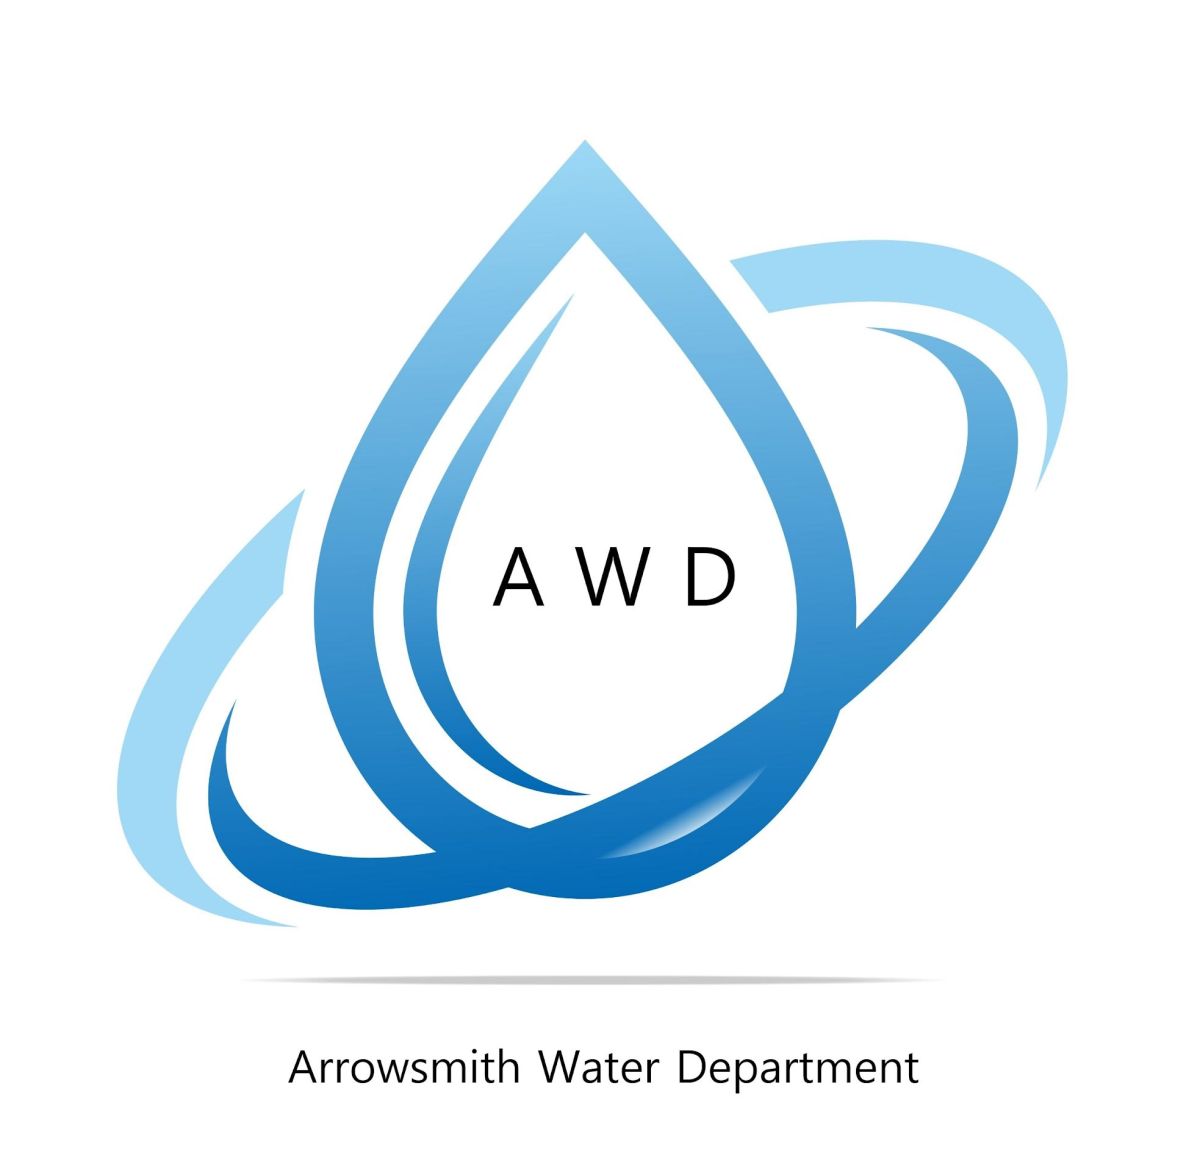 Arrowsmith Water Department logo